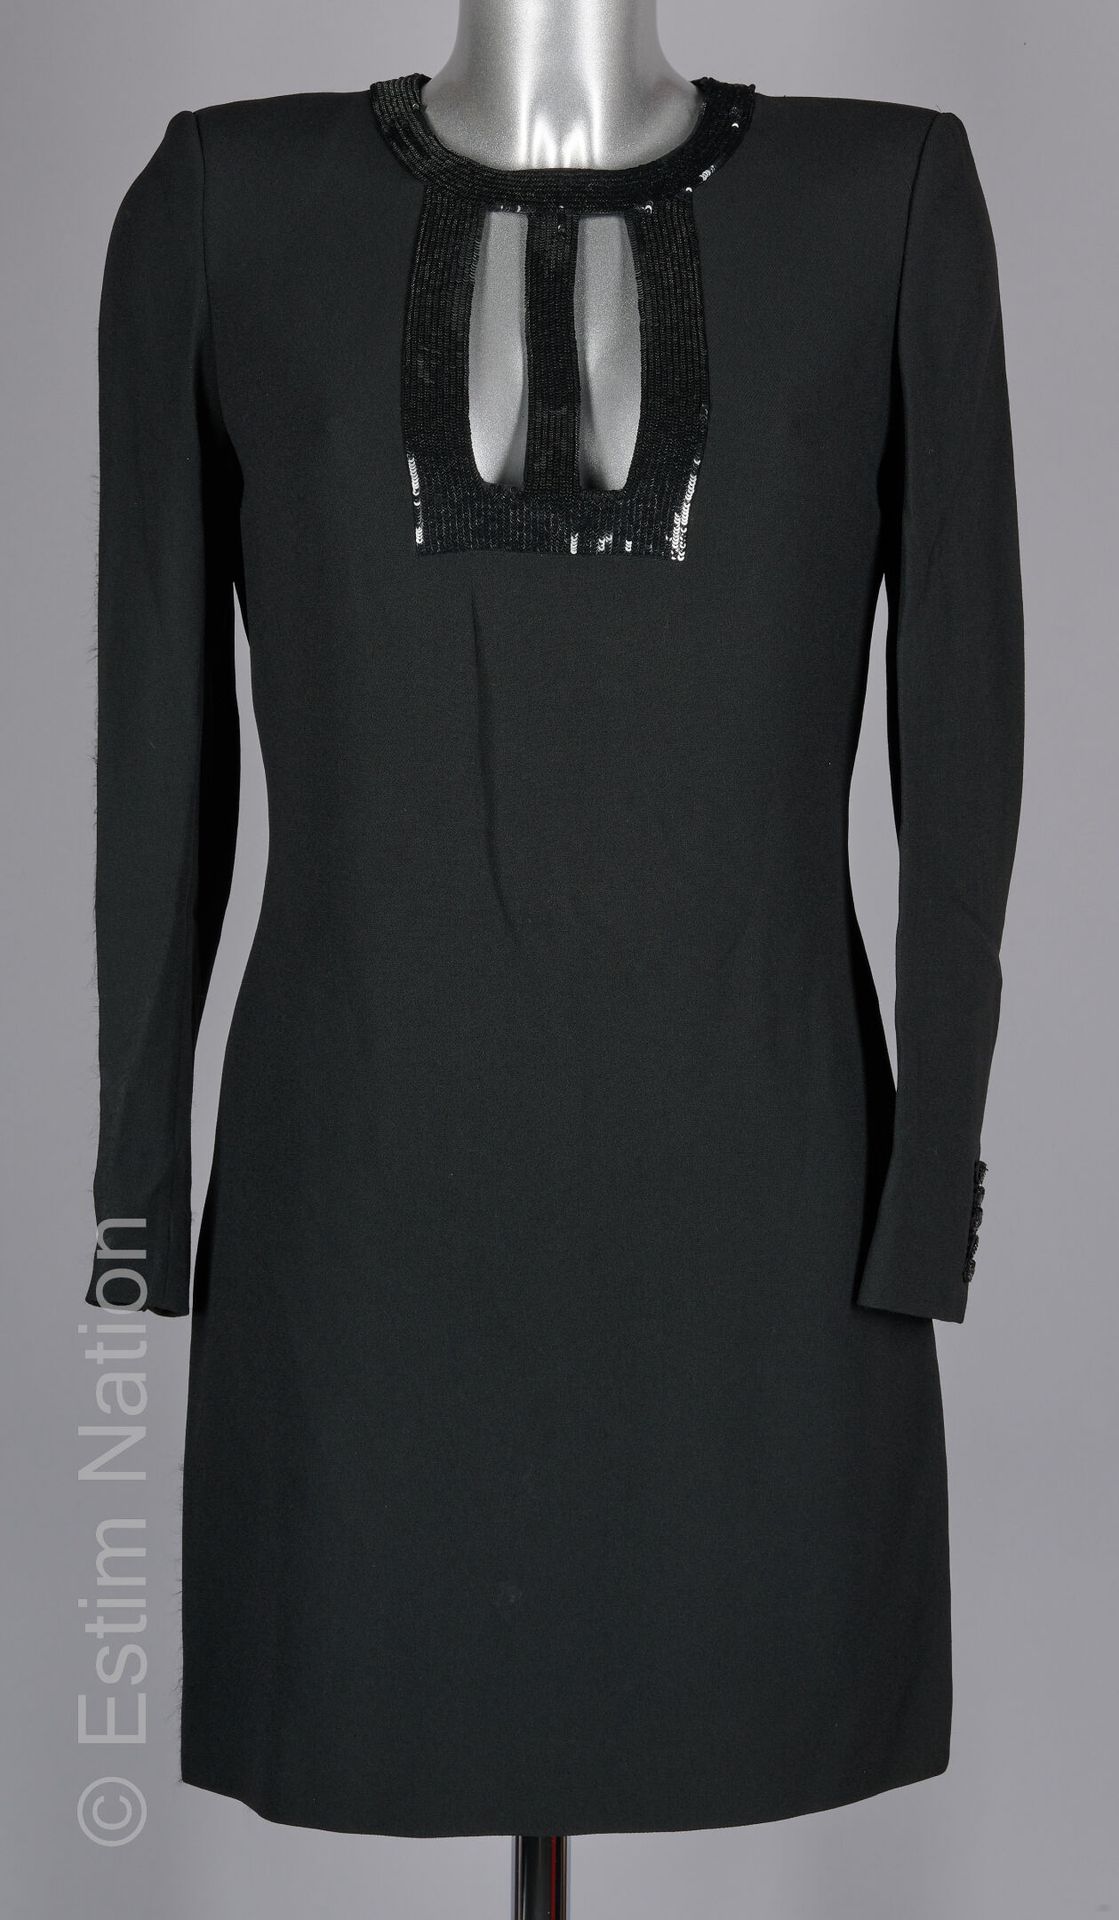 SAINT LAURENT PAR HEDI SLIMANE (2013) 黑色直筒绉绸连衣裙，圆领，胸前有亮片镂空装饰（S 40）（袖口材料略有磨损）。

图&hellip;